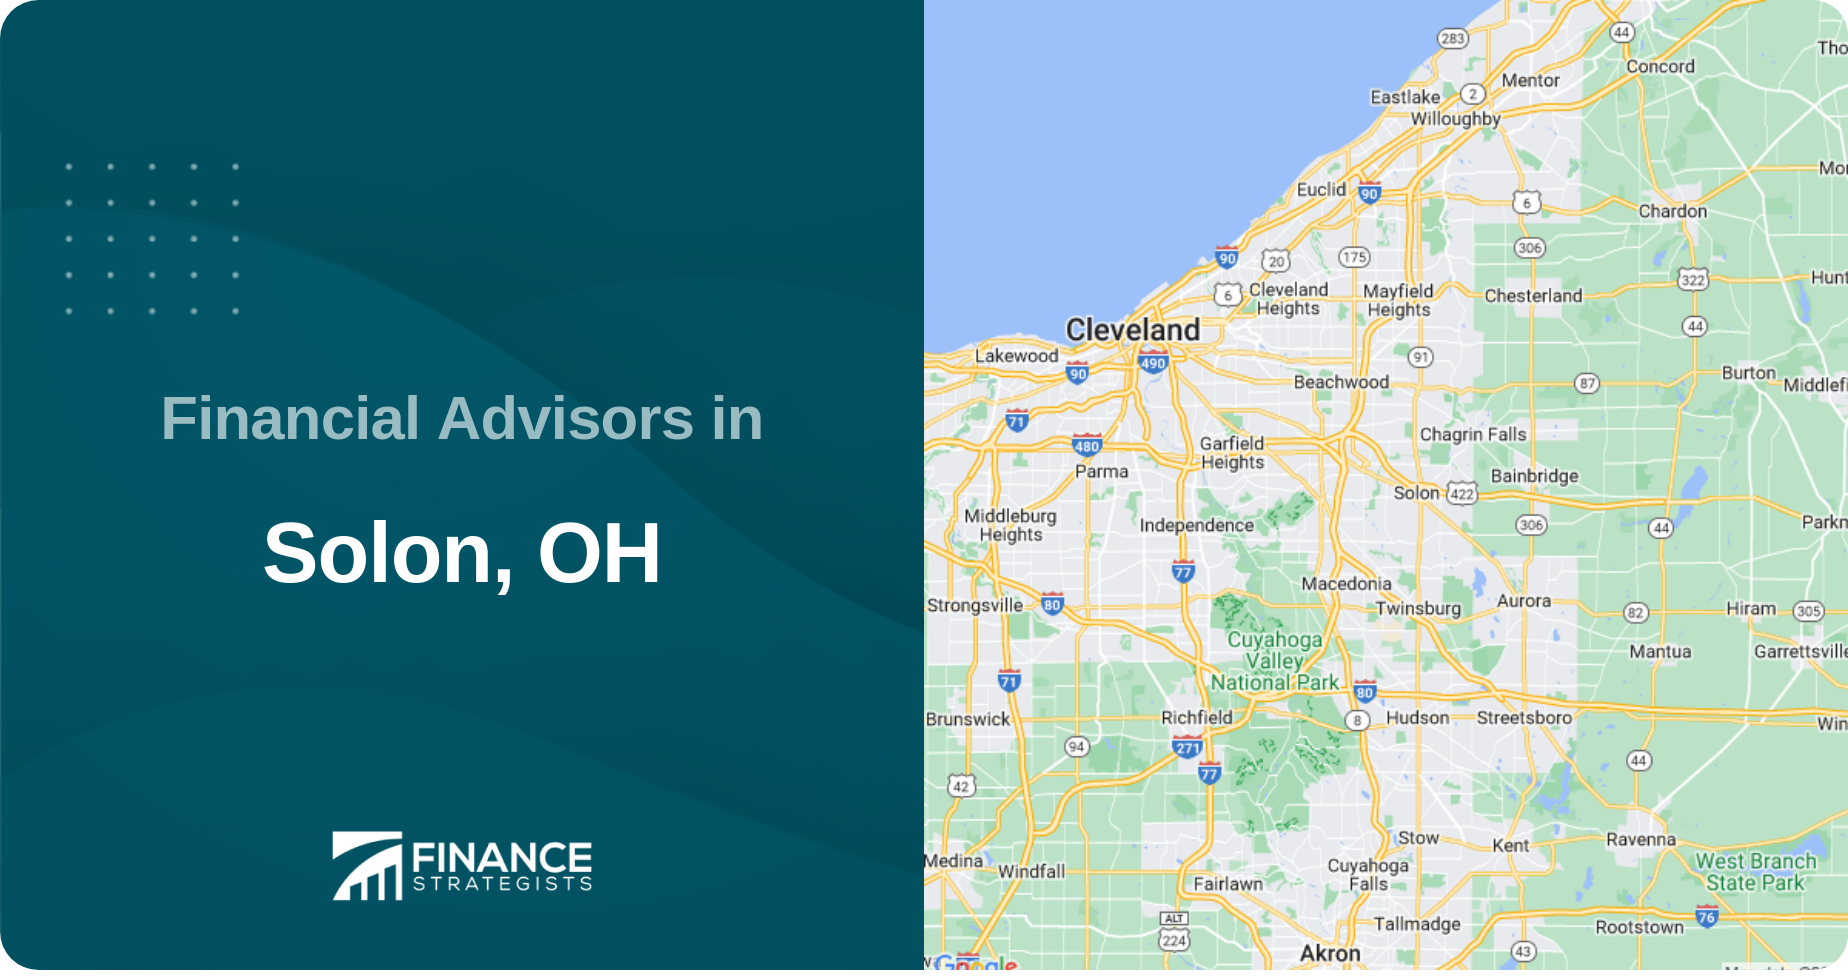 Financial Advisors in Solon, OH